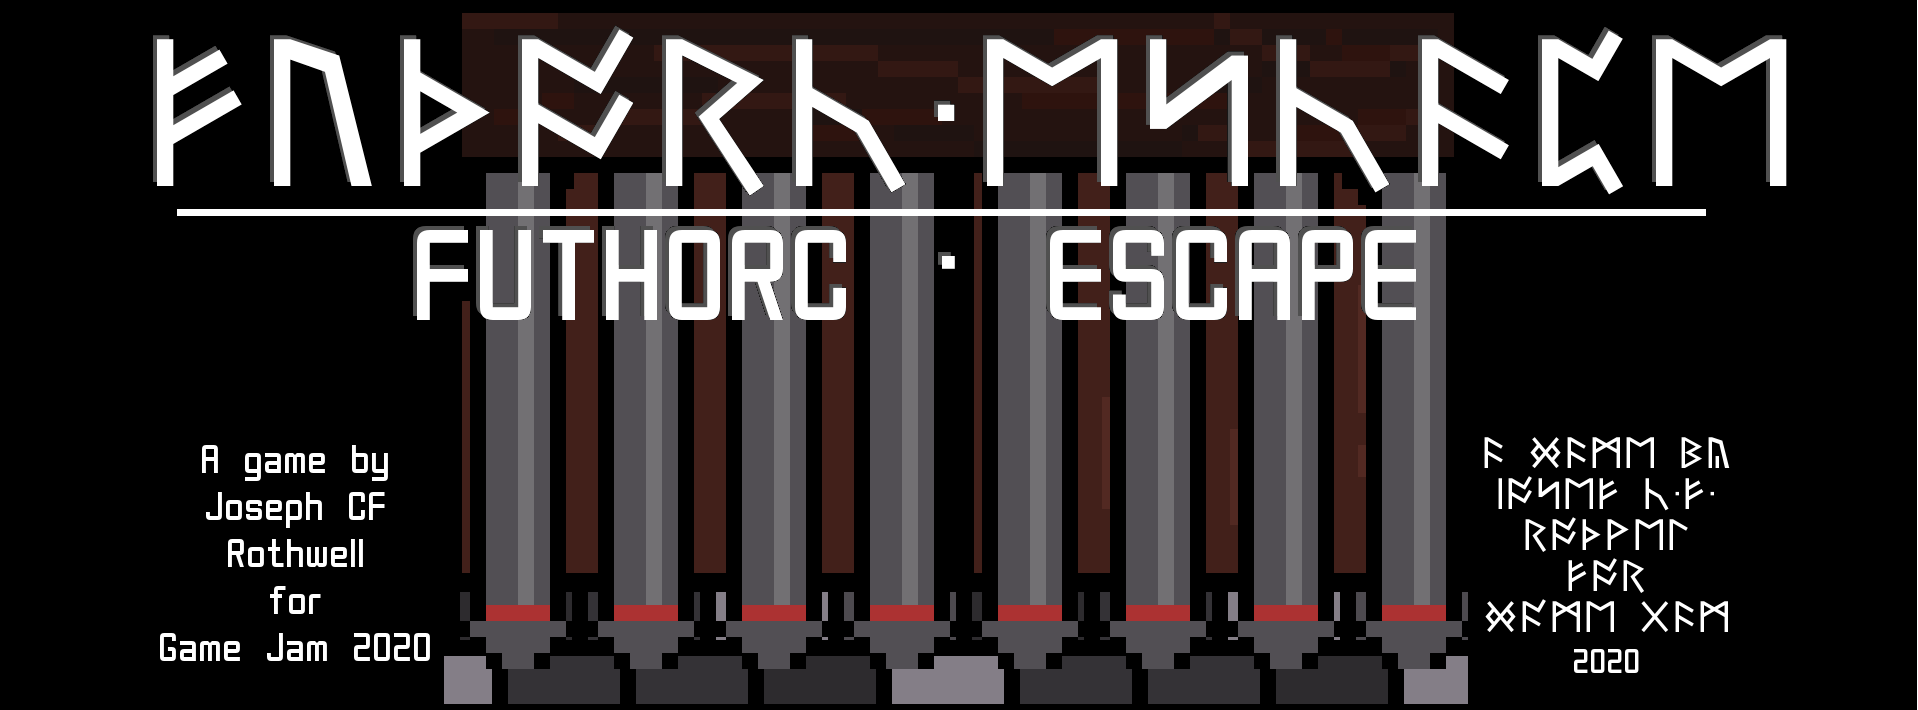 Futhorc Escape | ᚠᚢᚦᚩᚱᚳ᛫ᛖᛋᚳᚫᛈᛖ